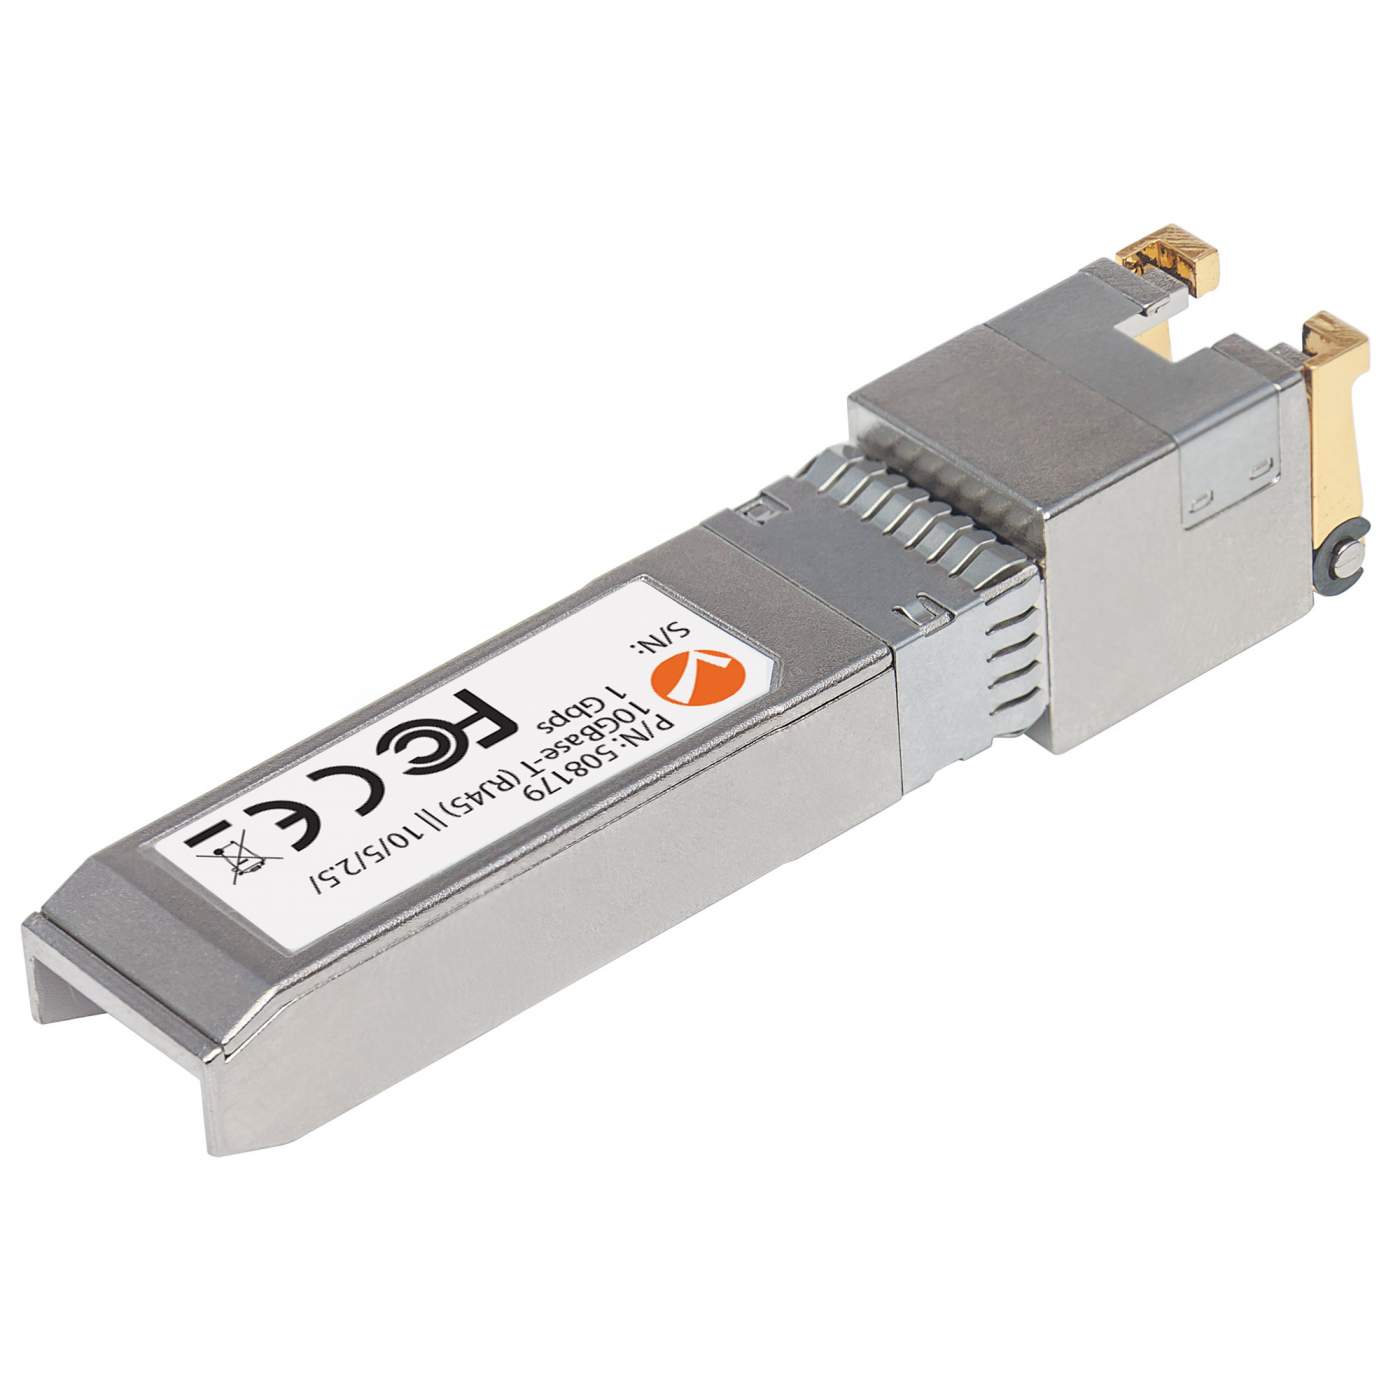 10 Gigabit Copper SFP+ Transceiver Module Image 3